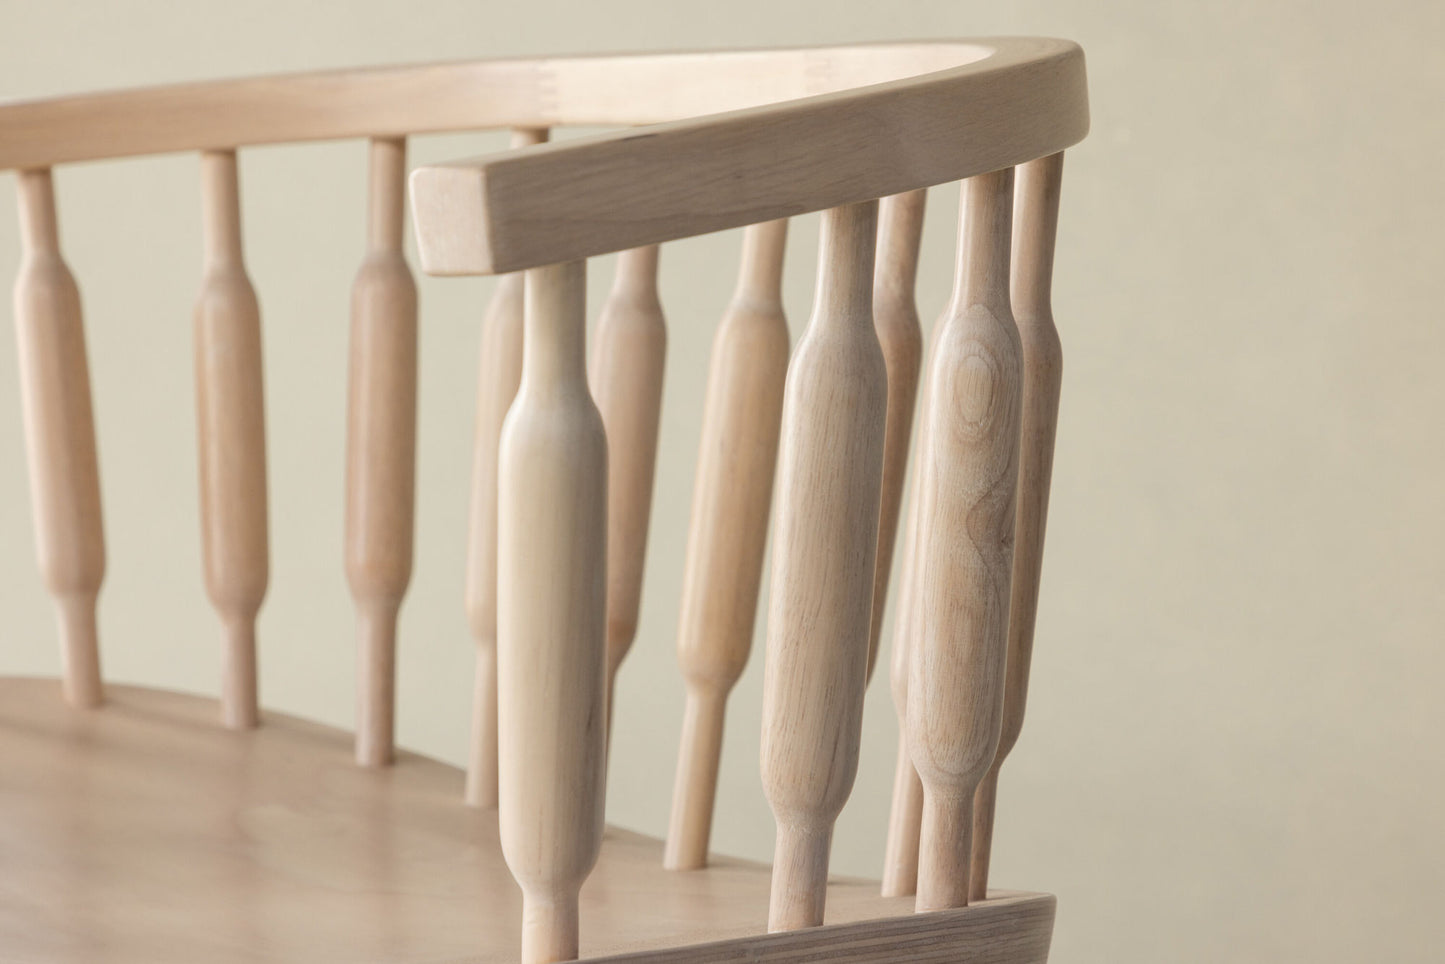 Tjärnö fauteuil natuurlijke hout